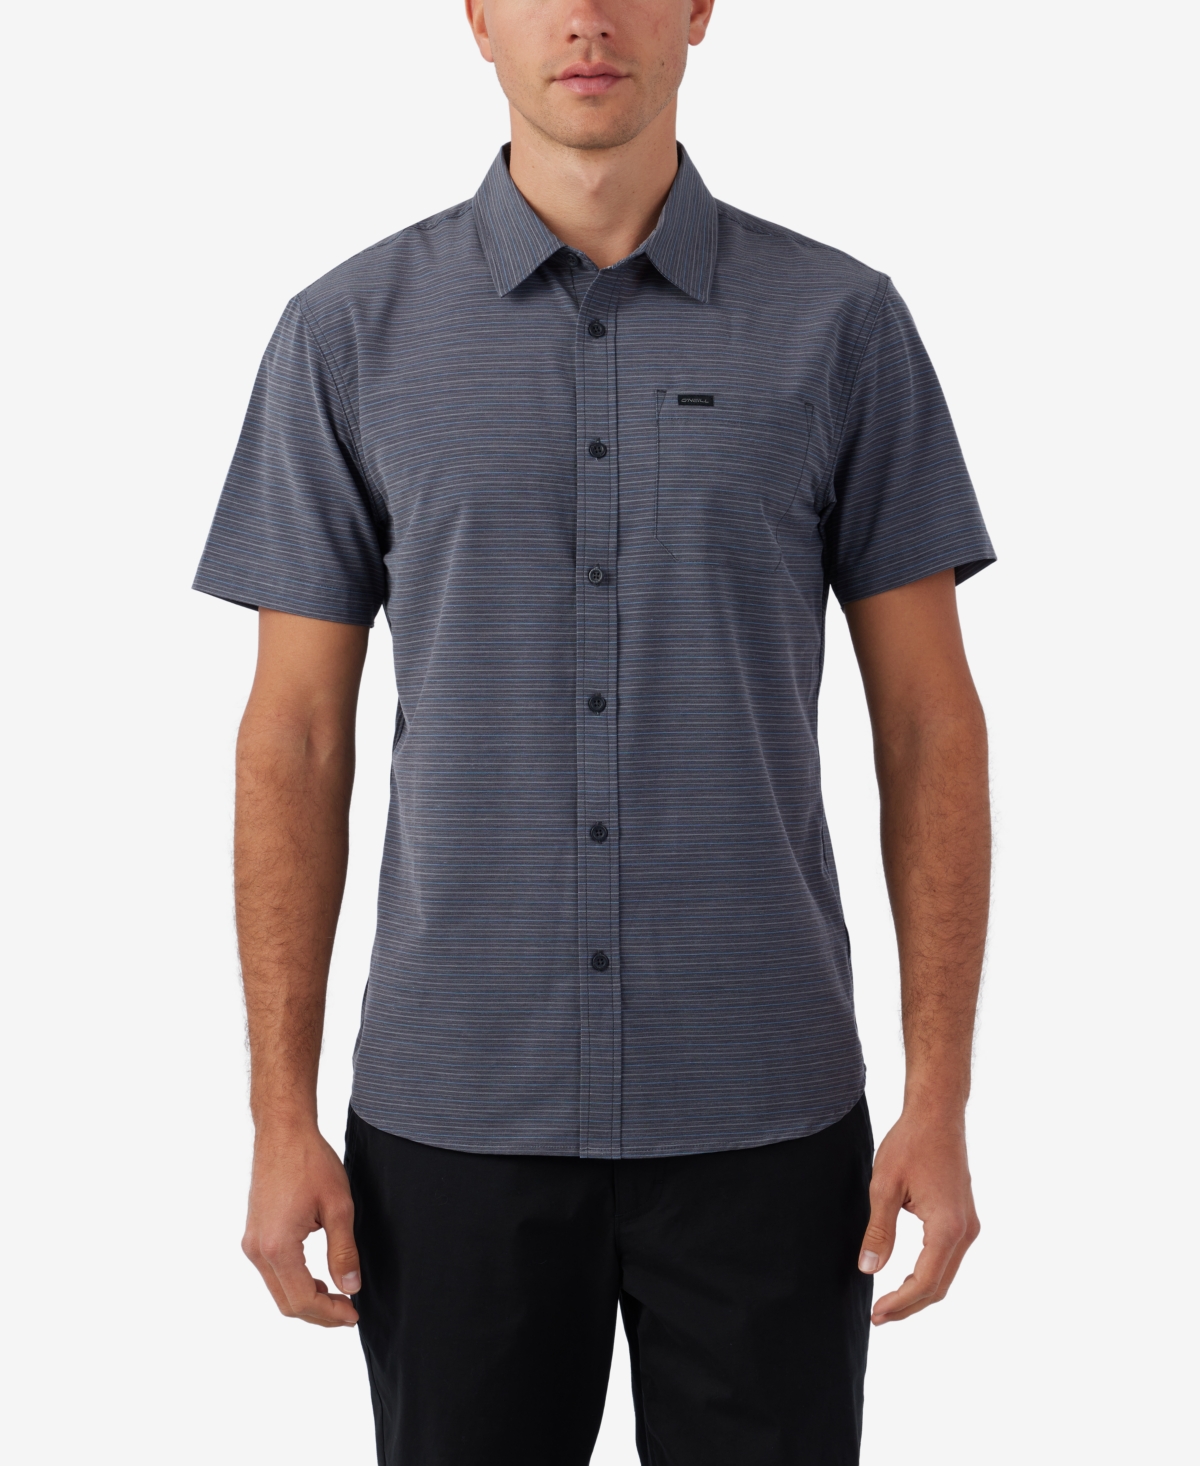 Men's Trvlr Upf T Standard Short Sleeve Woven Shirt - Black